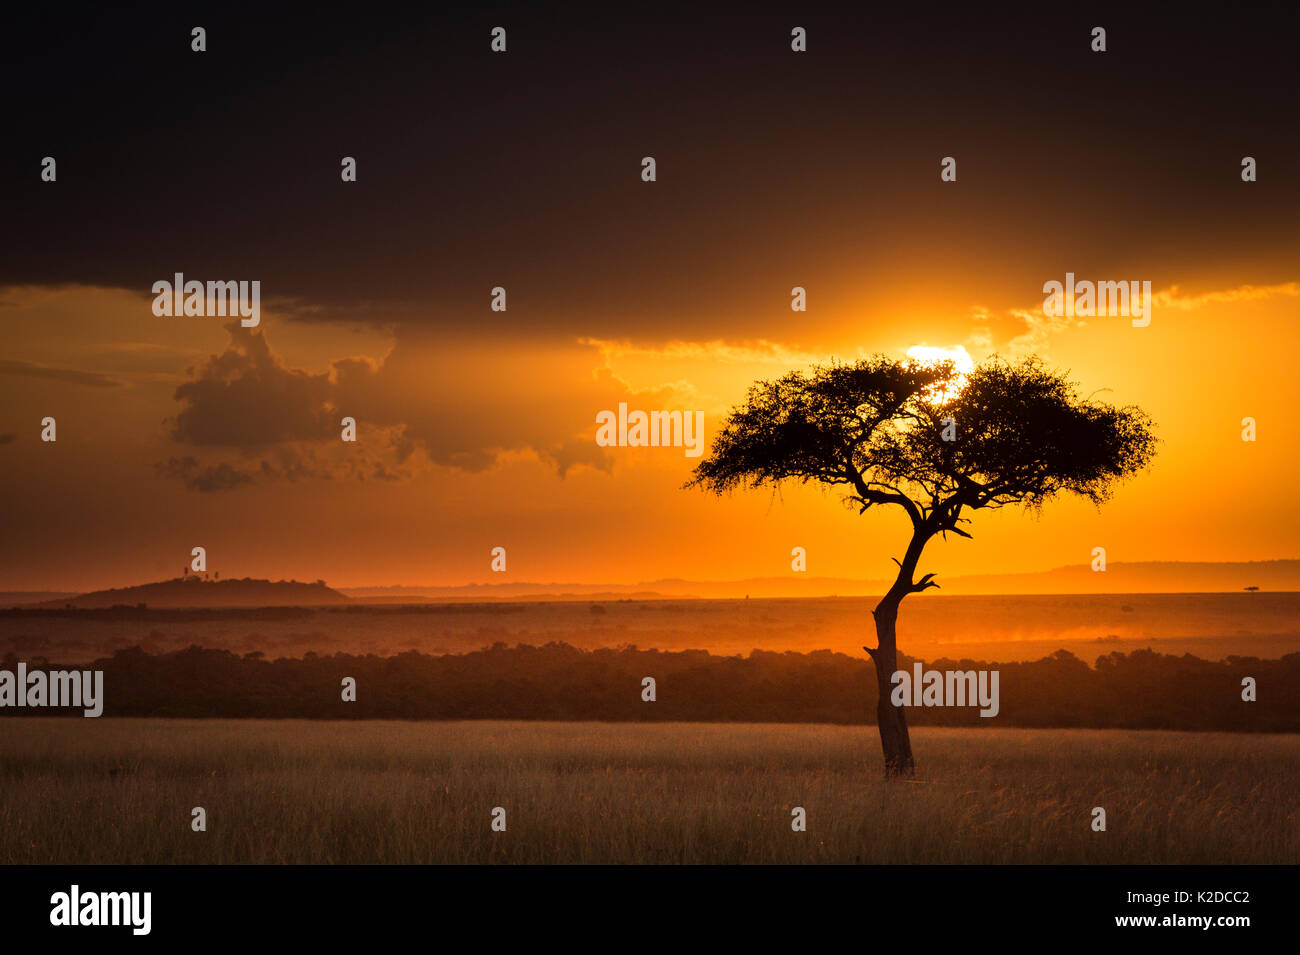 Sunset over savanna landscape image with a lone (Acacia) tree, Masai Mara NR, Kenya Stock Photo